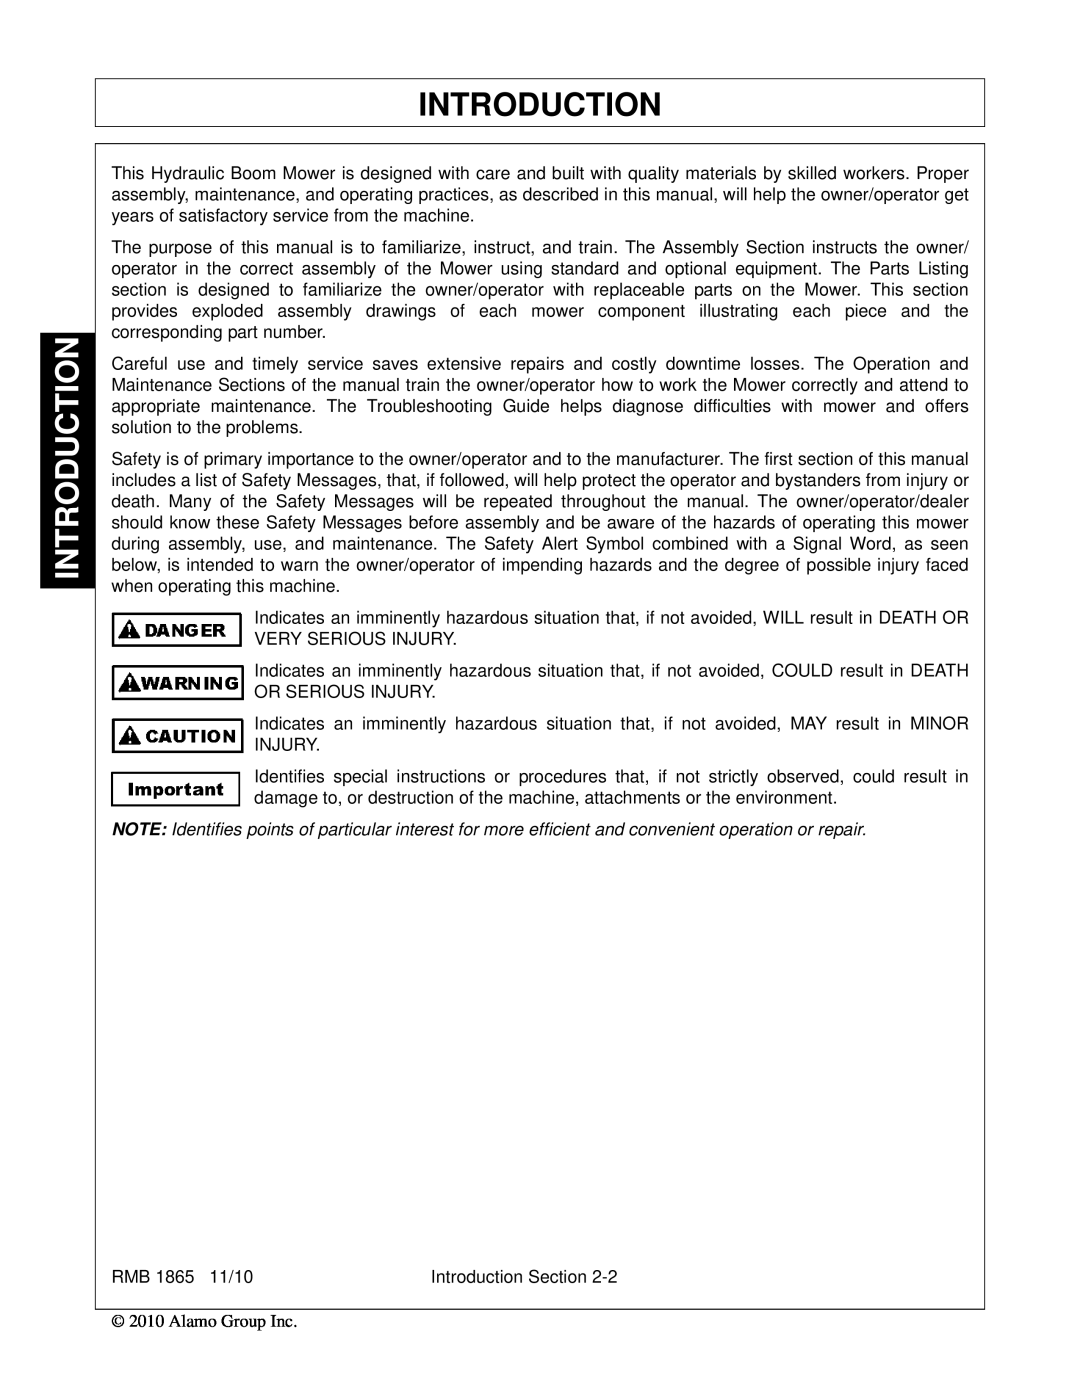 Bush Hog RMB 1865 manual Introduction 